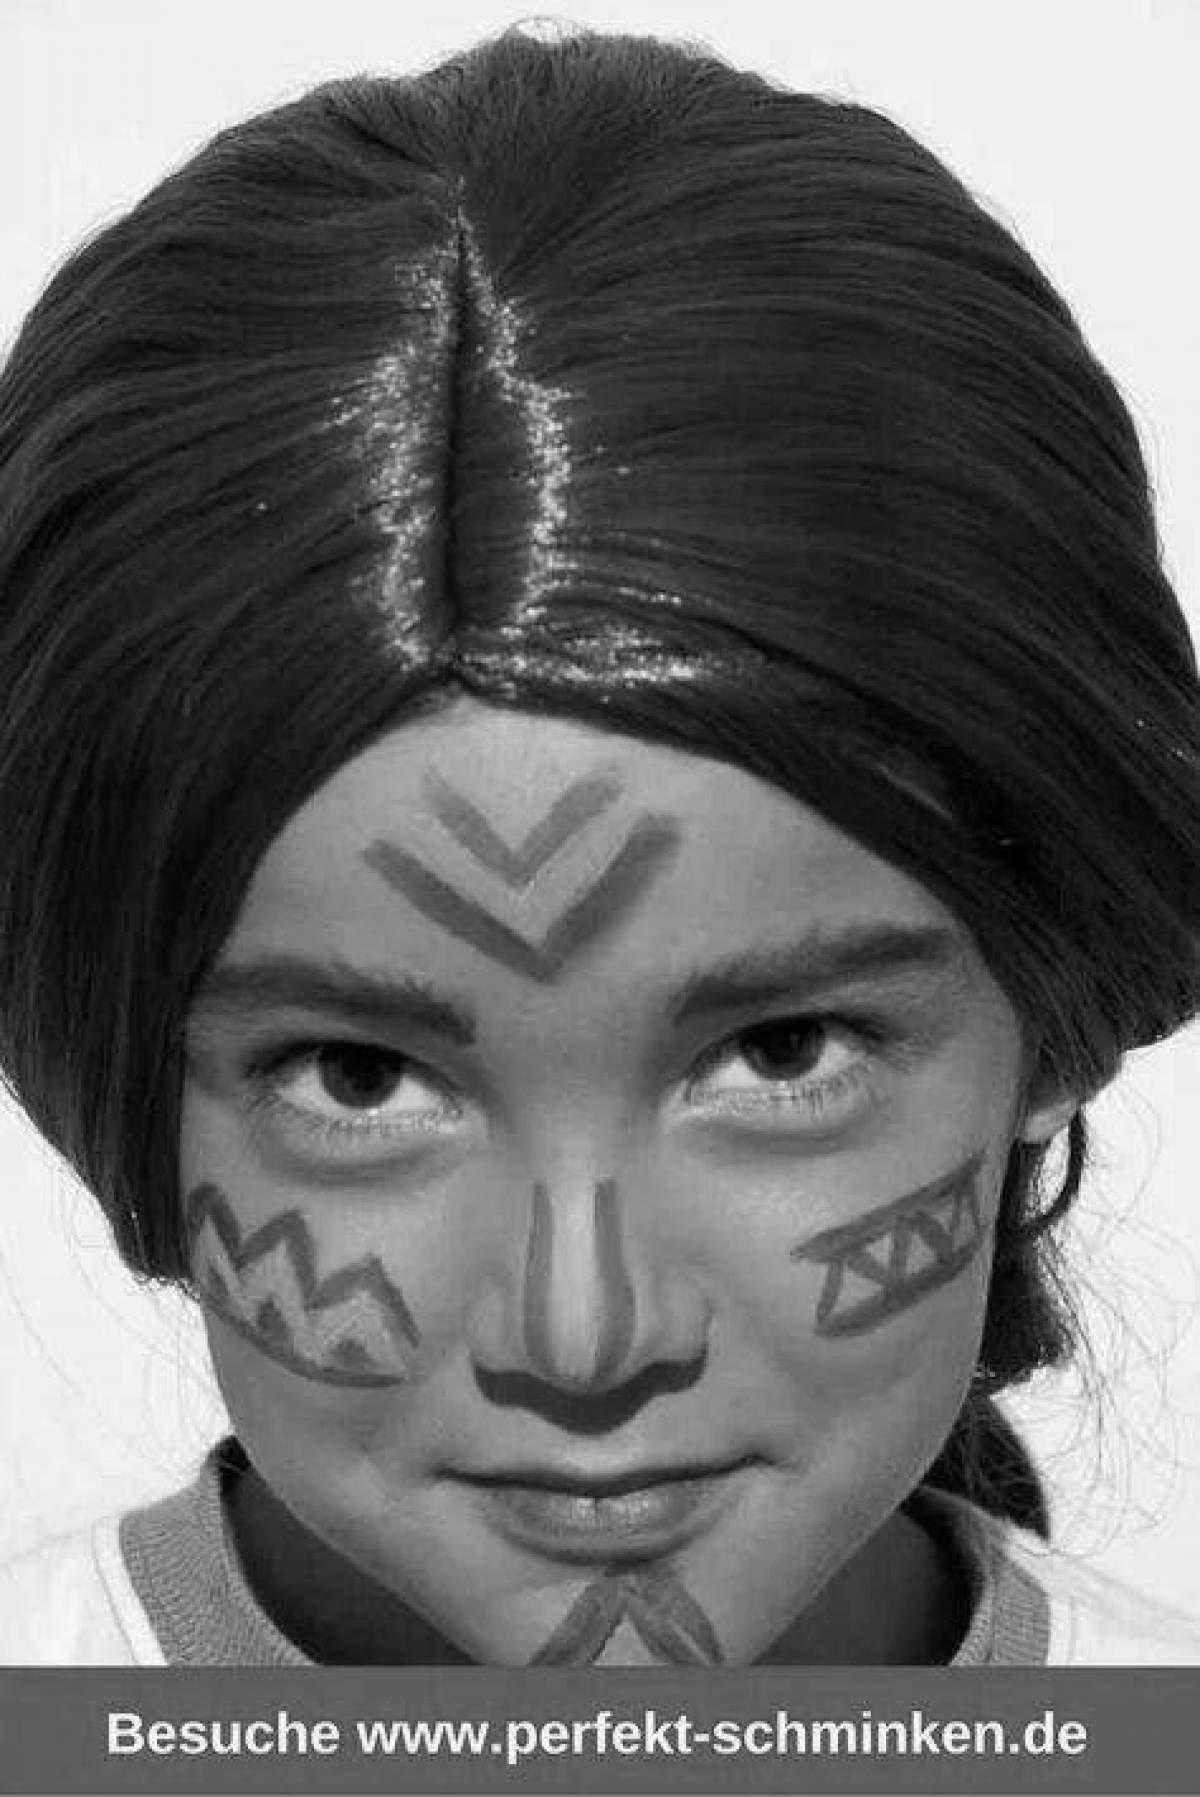 Яркие раскраски индейцев на лицах